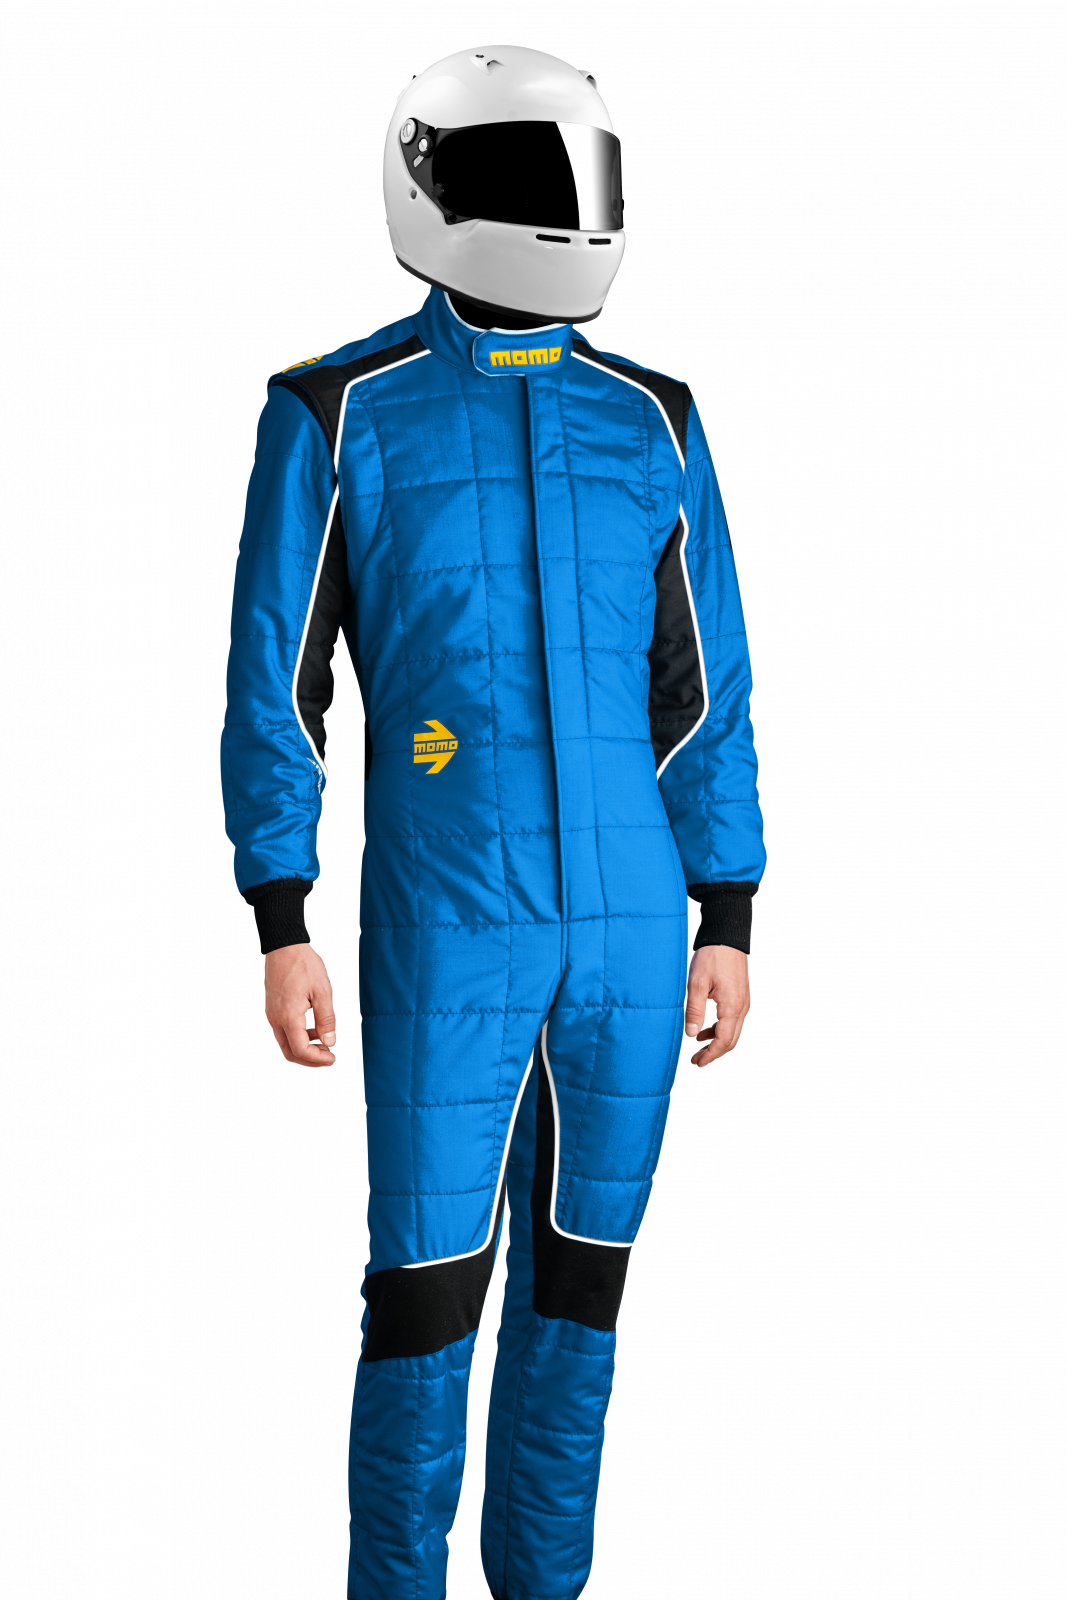 MOMO Corsa Evo Blue Size 52 Racing Suit TUCOEVOBLU52